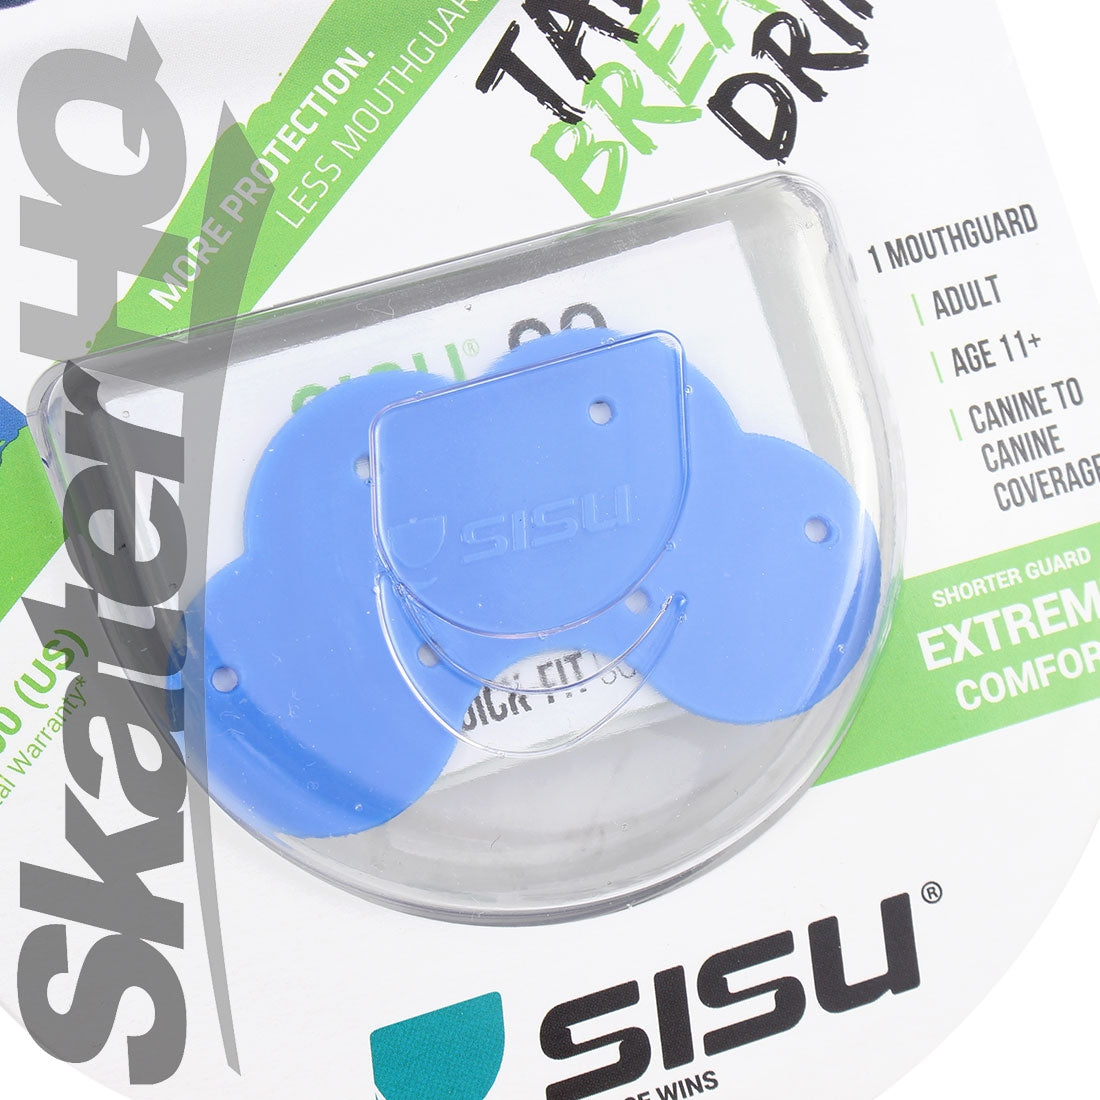 SISU GO Adult Mouthguard - Royal Blue Protective Mouthguards